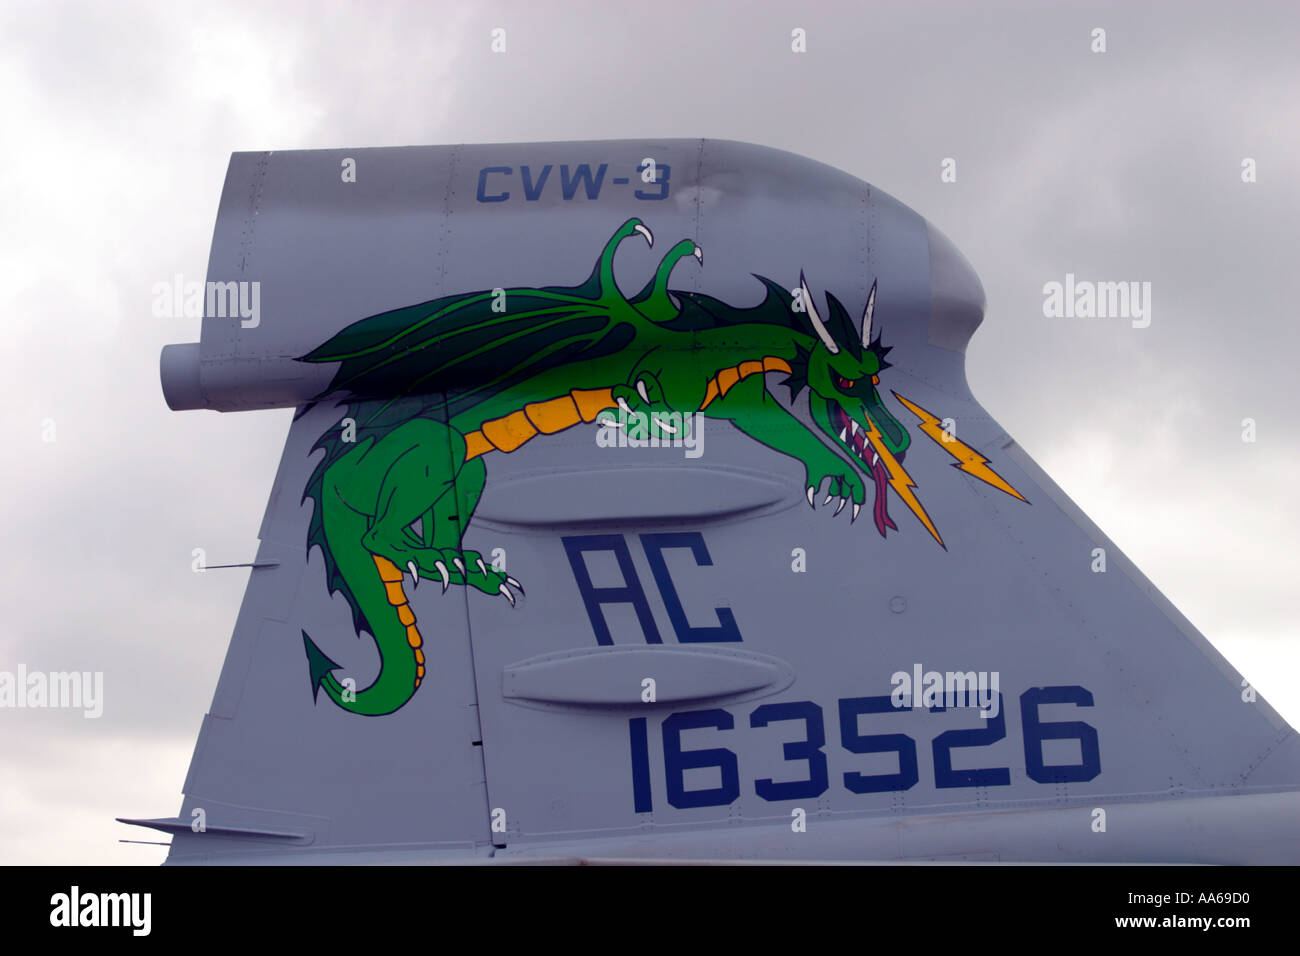 United States Grumman Prowler EA-6B Electronic Warfare Aircraft Stock Photo